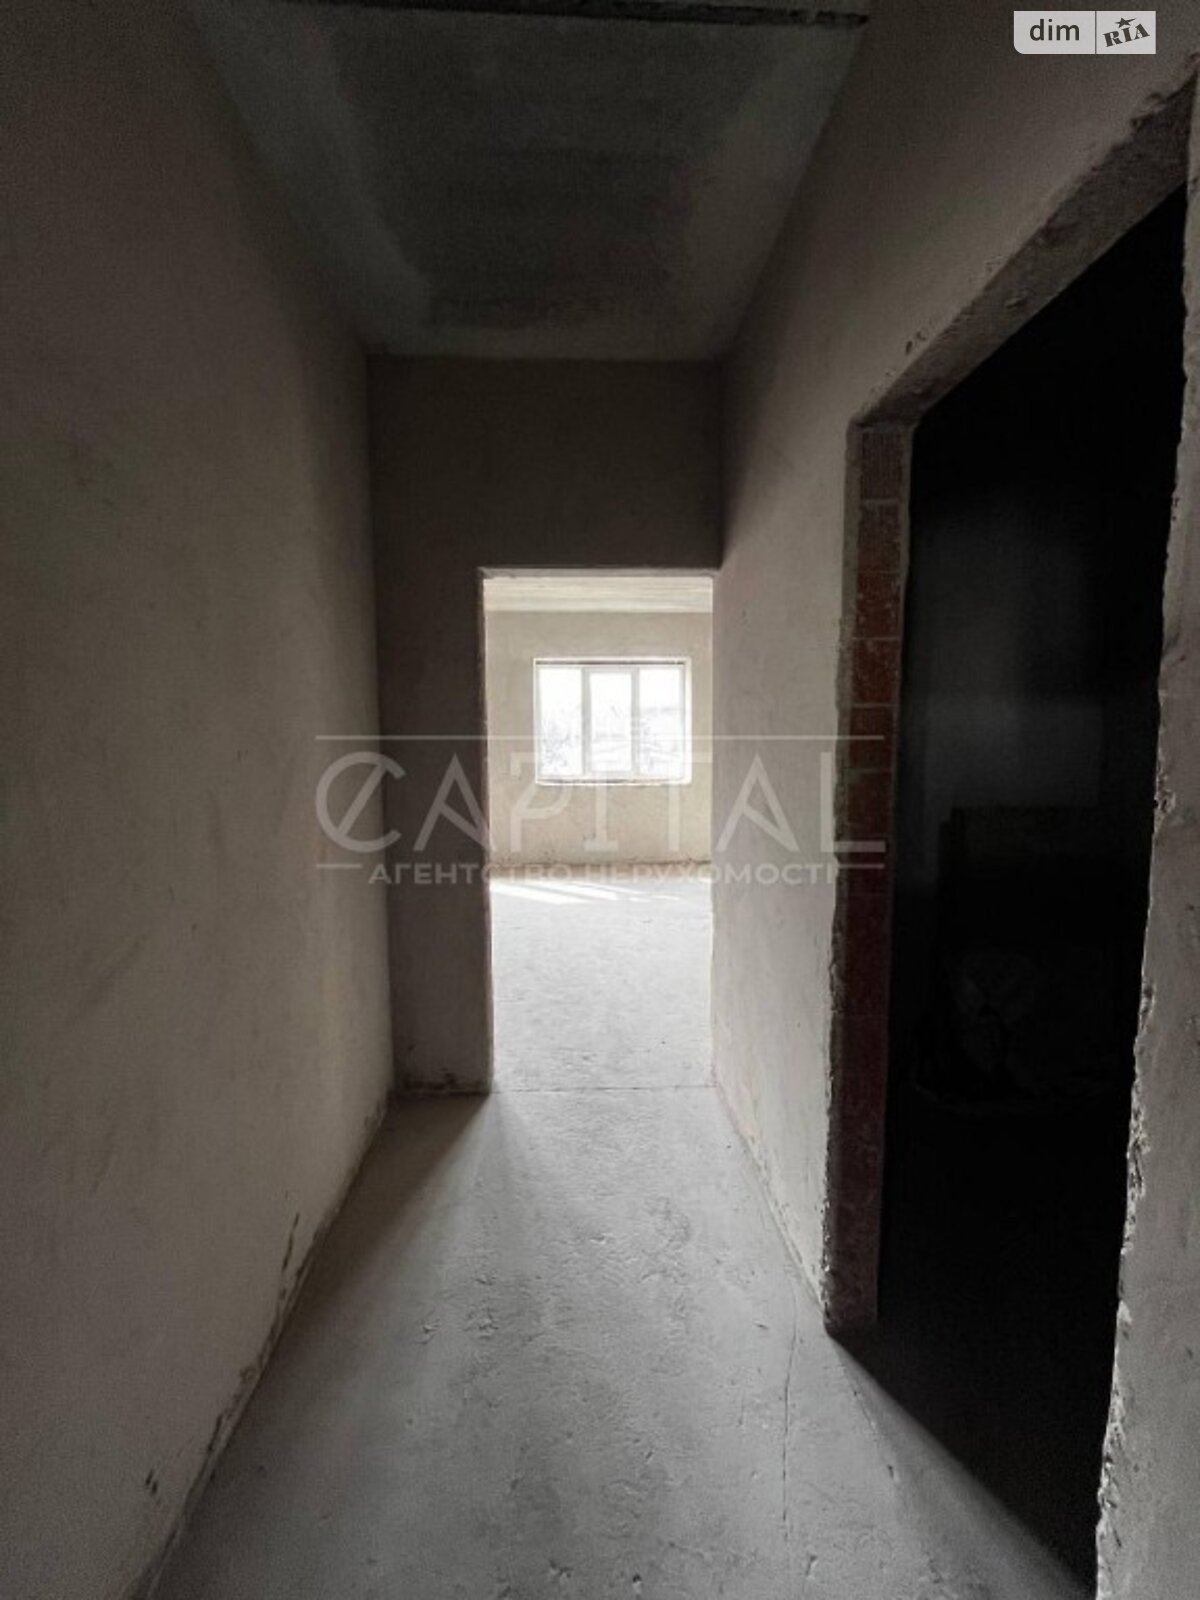 Продажа части дома в Ходосовке, улица Феодосия Печерского 4, 6 комнат фото 1